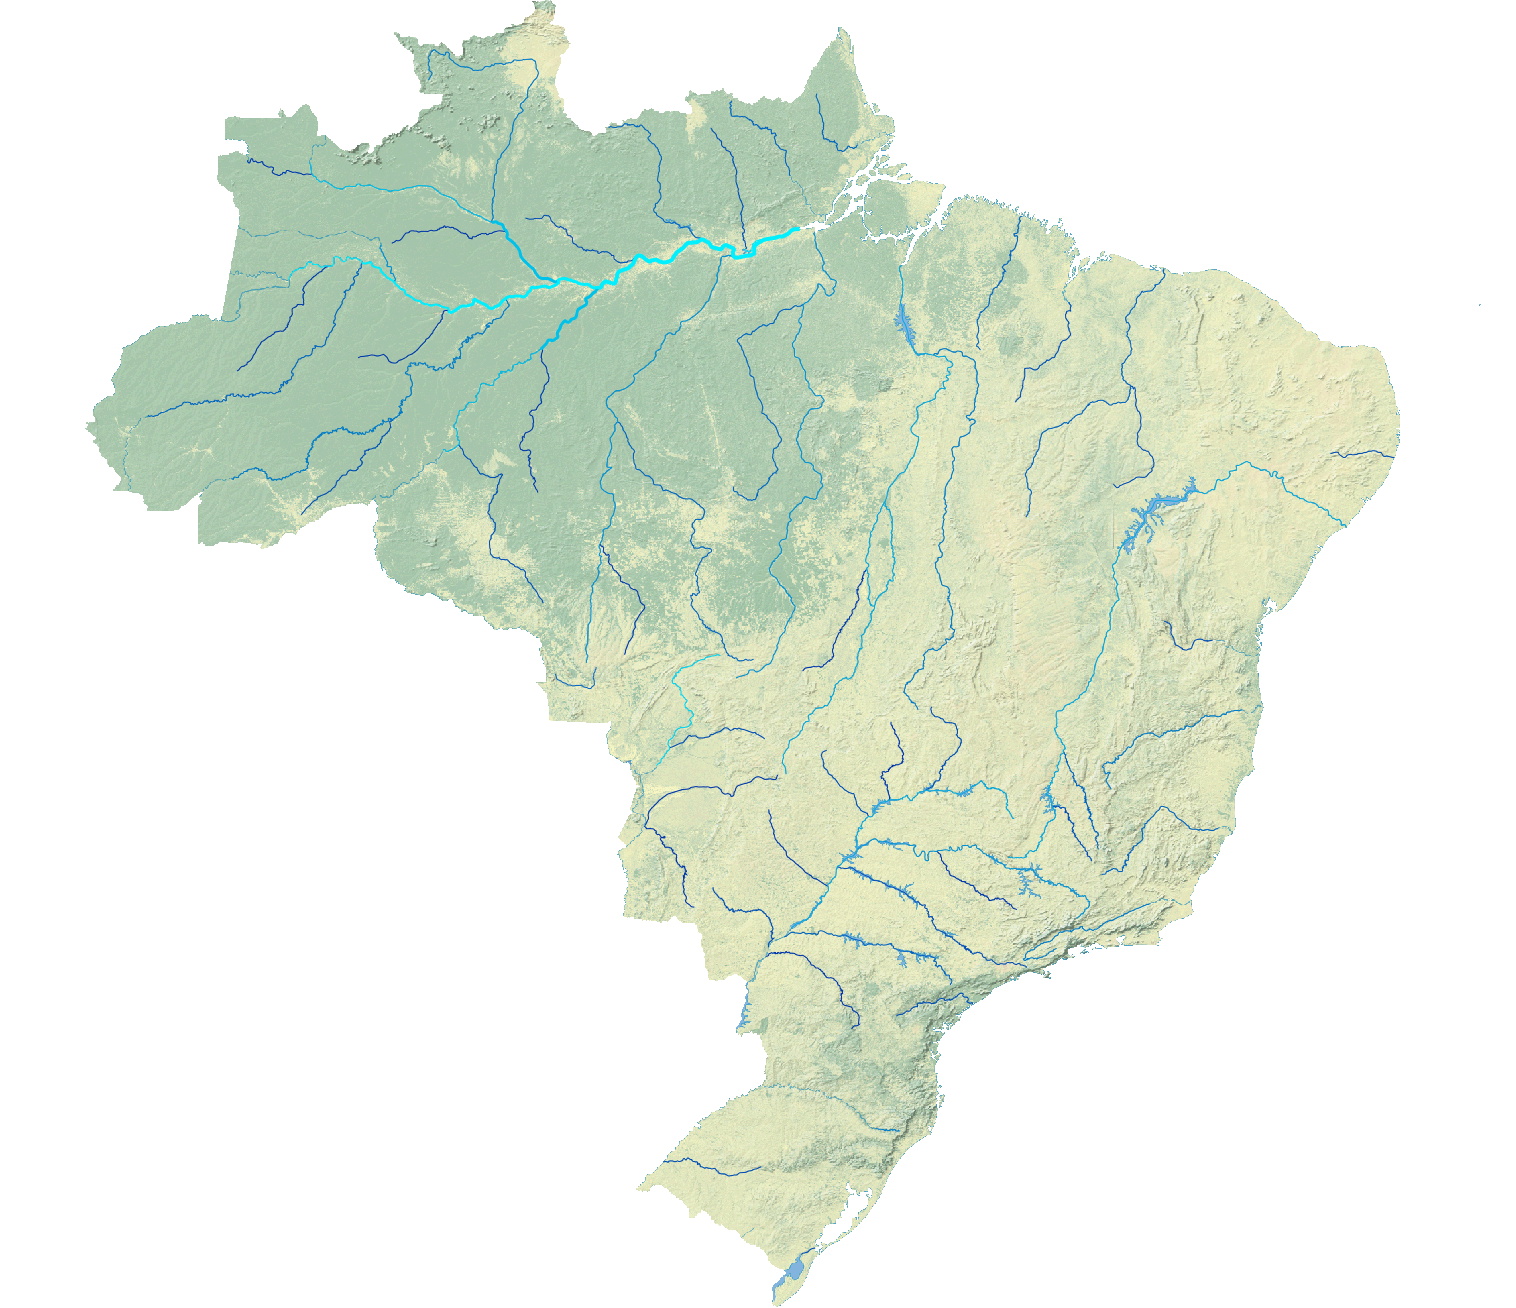 Brazilian Rivers